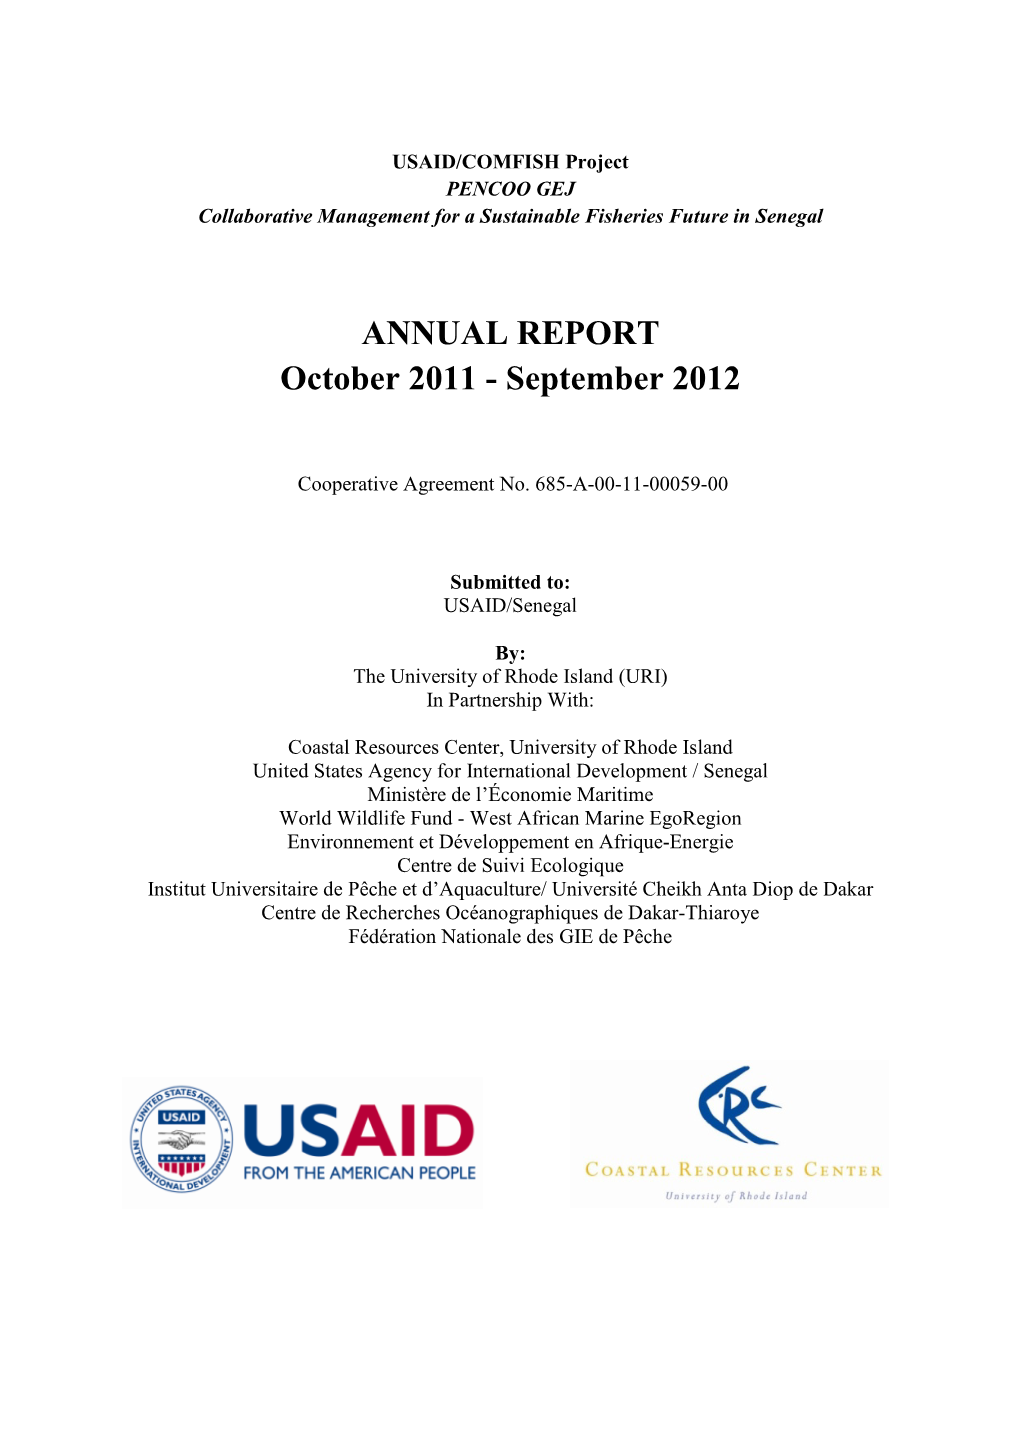 USAID/COMFISH Annual Report, Oct. 2011-Sept. 2012